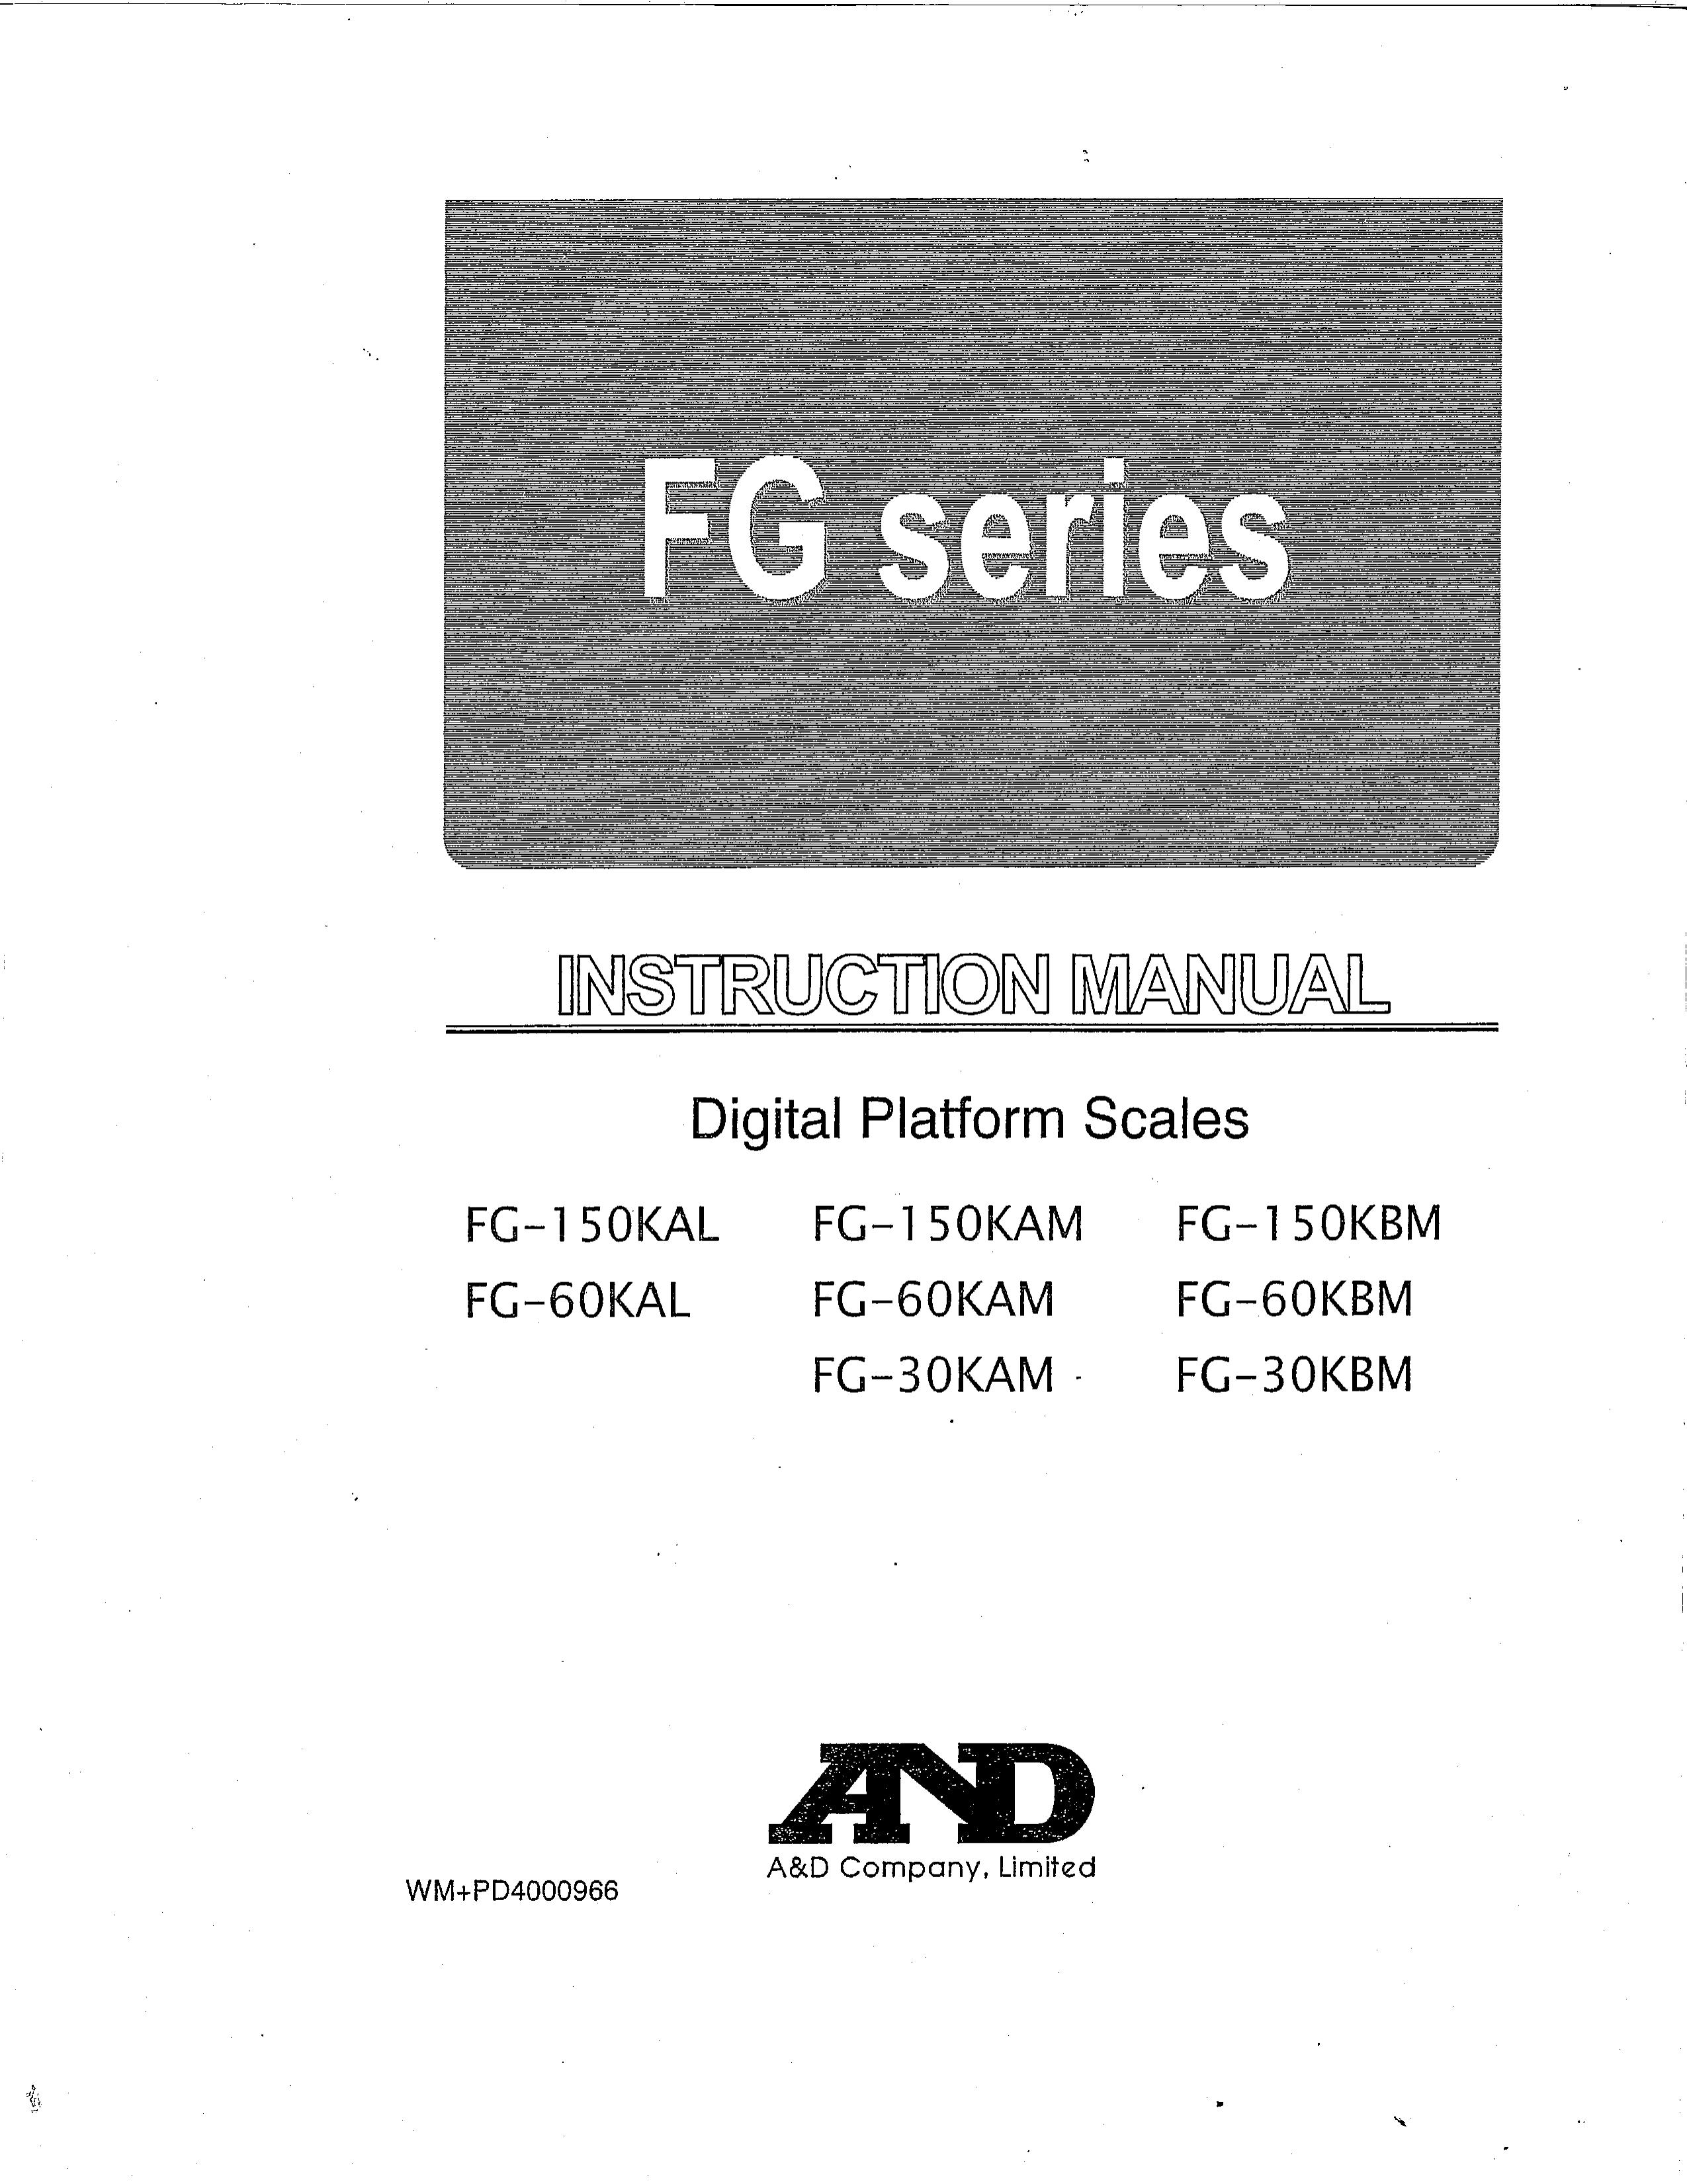 A&D FG-150KAM Scale User Manual